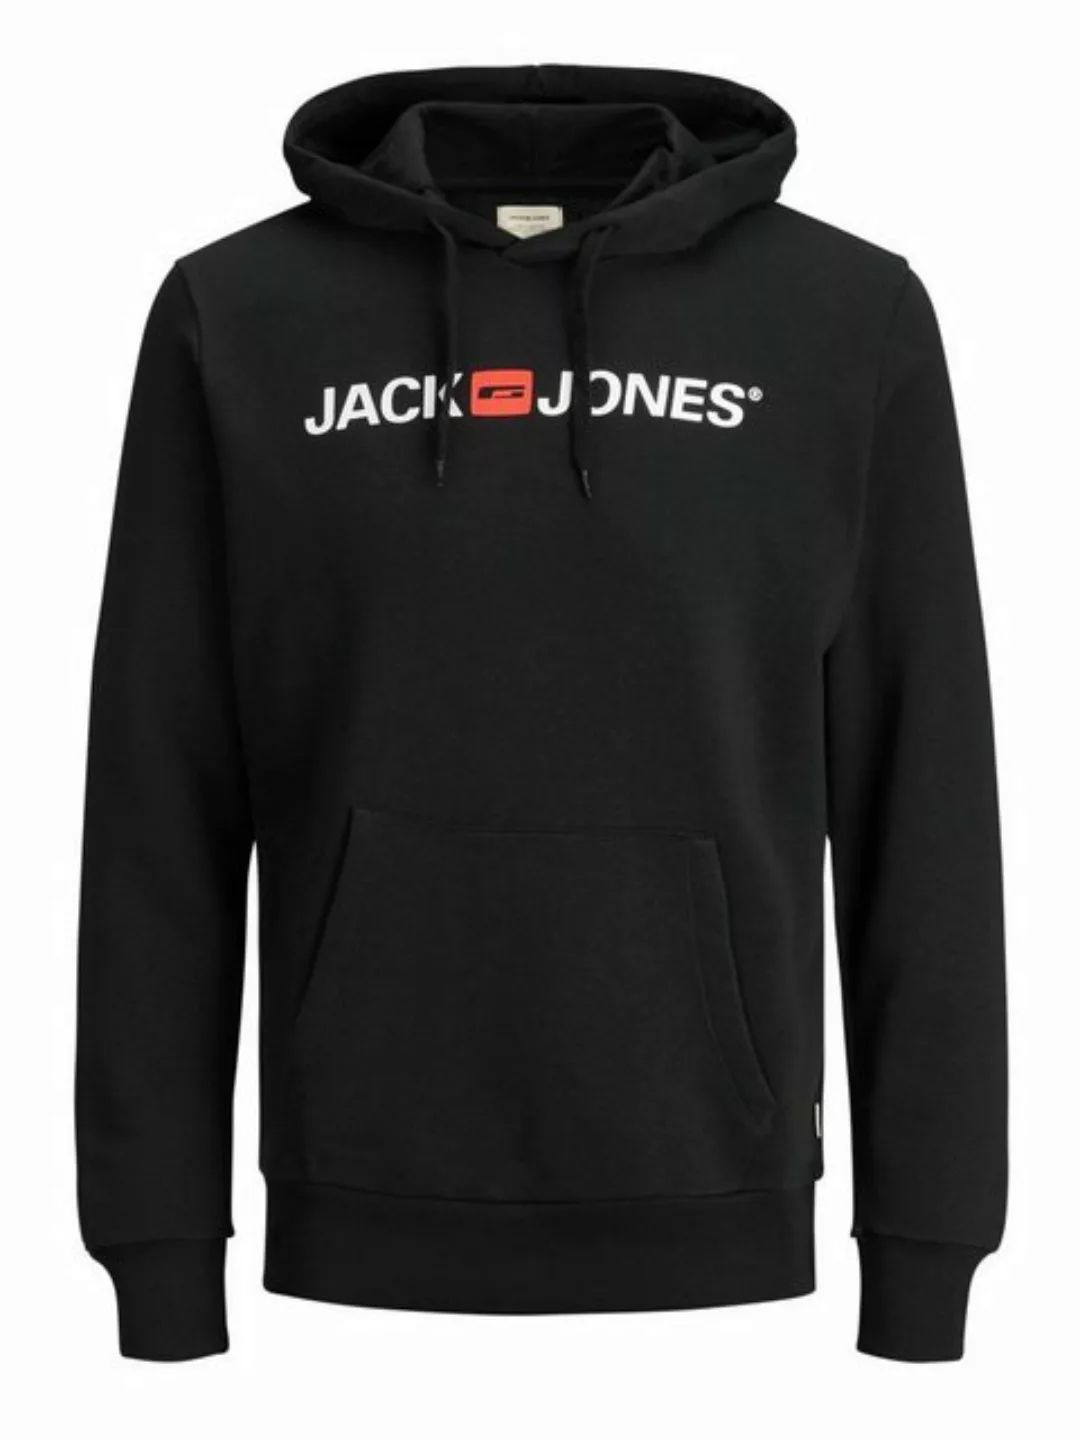 Jack & Jones Logo Kapuzenpullover 2XL Navy Blazer günstig online kaufen